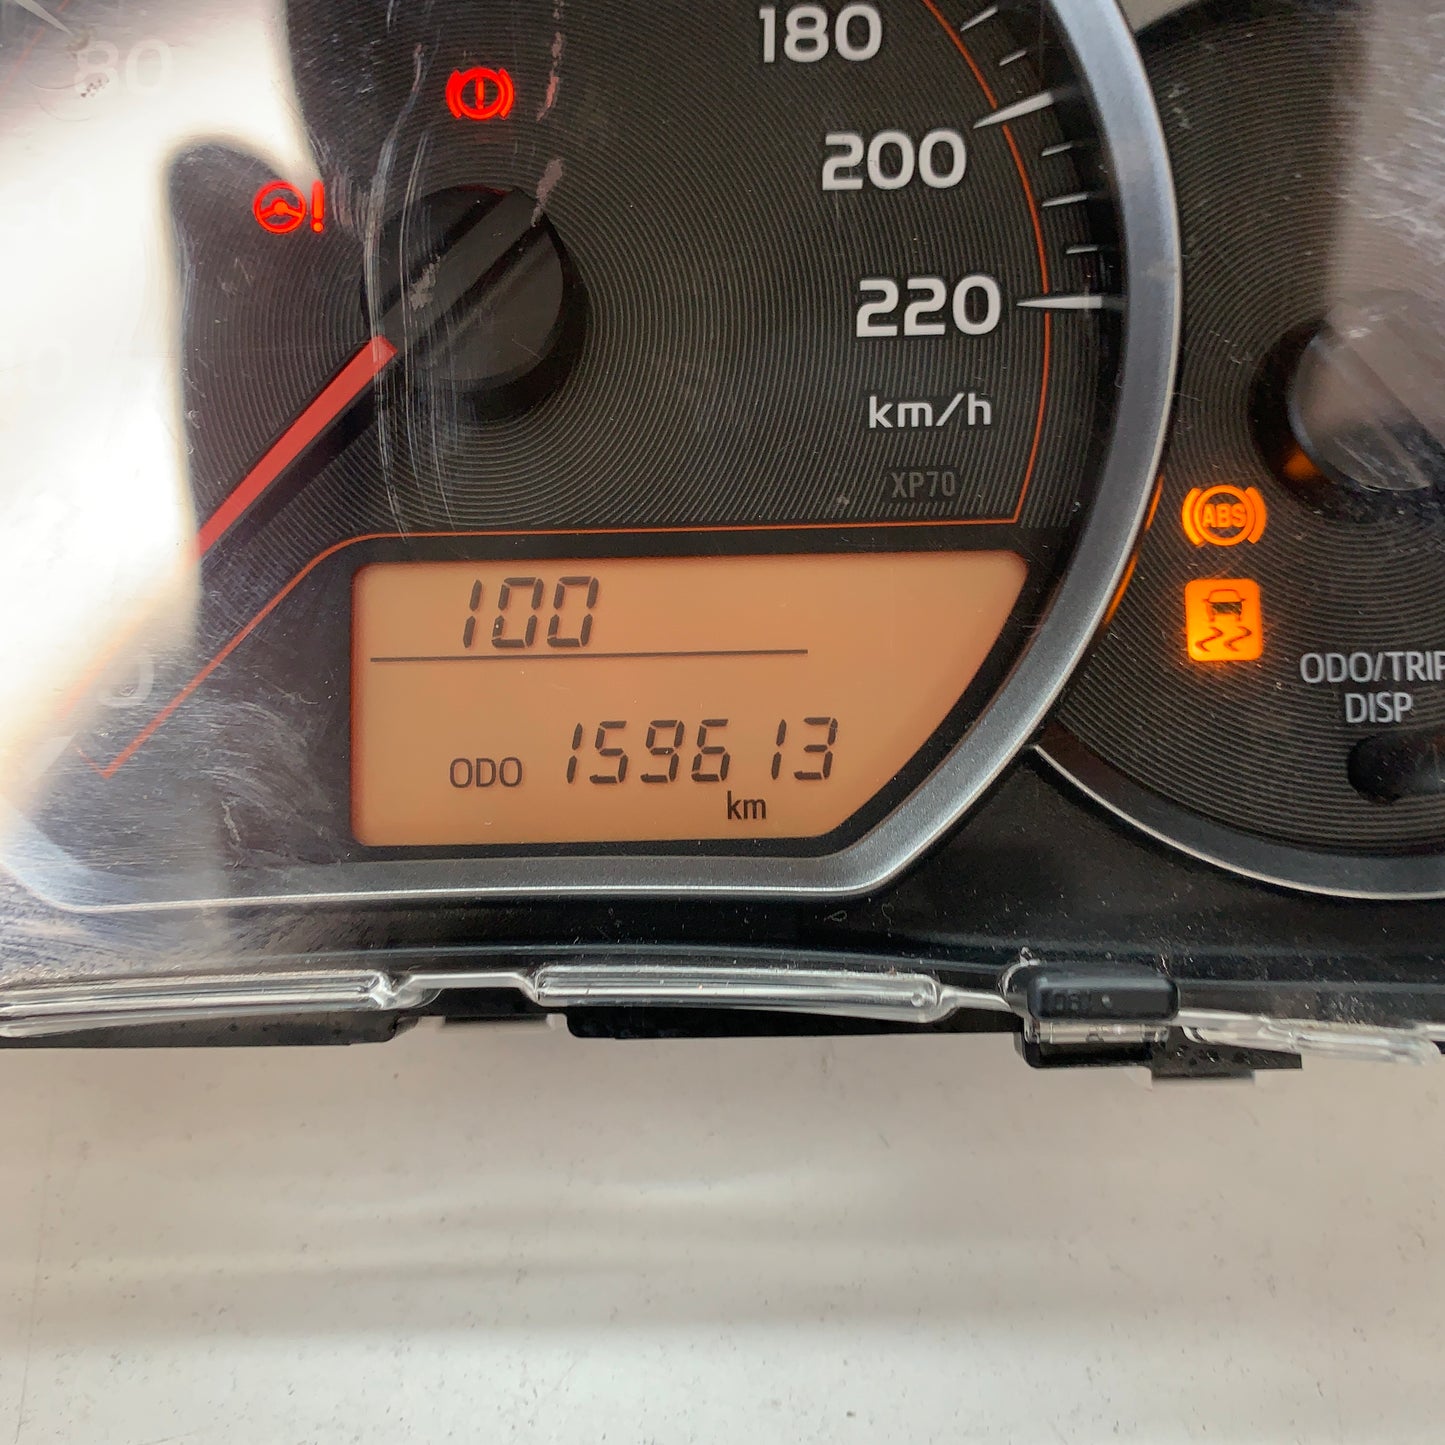 Toyota Yaris Hatchback Instrument Cluster NCP13# 2011 2012 2013 2014 159613km